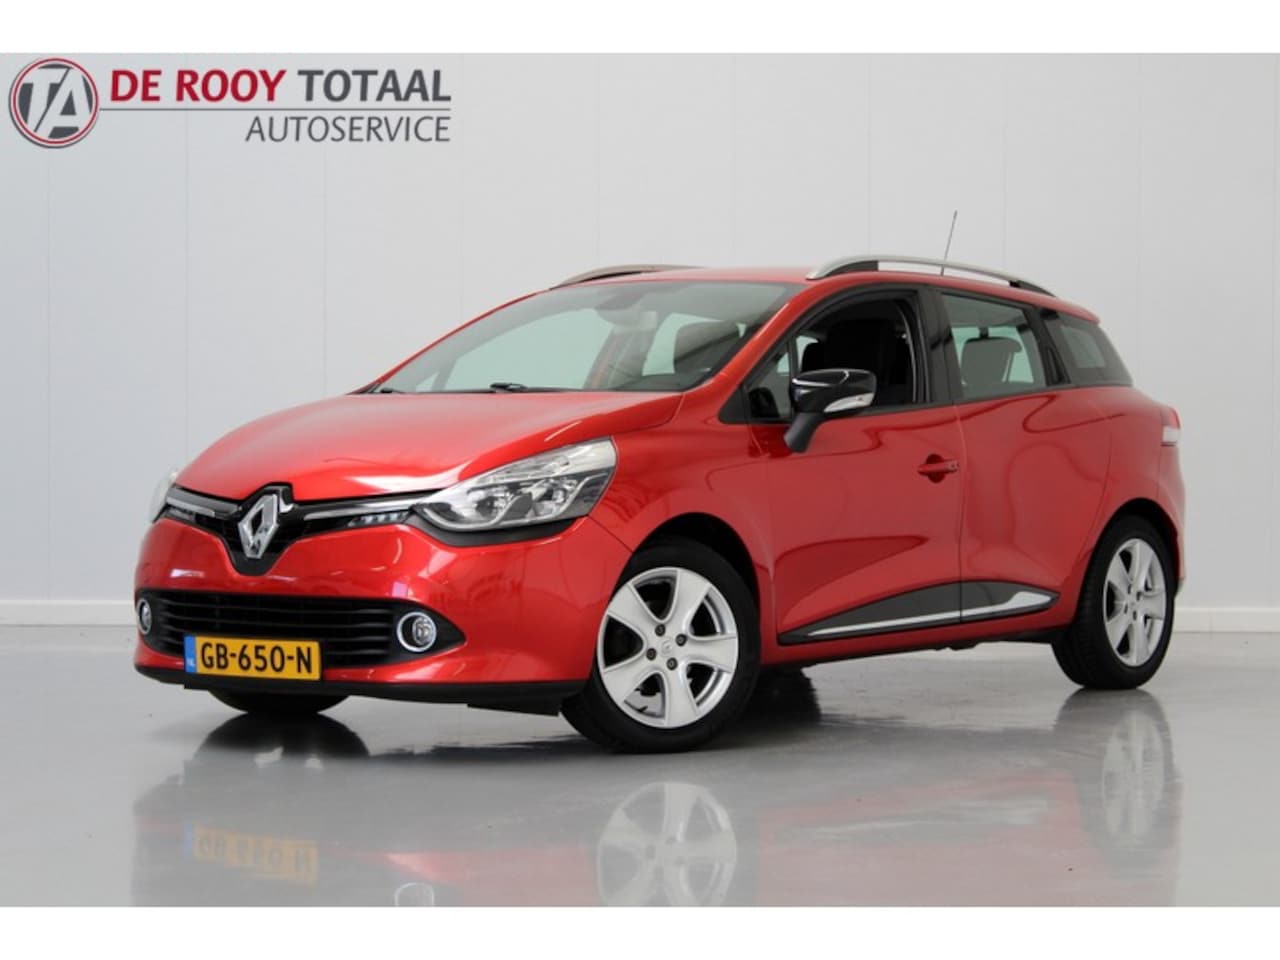 dek Naar opgroeien Renault Clio Estate 1.5 dCi ECO Dynamique 90PK, NAVIGATIE | CRUISE CONTROLE  | BLUETOOTH 2015 Diesel - Occasion te koop op AutoWereld.nl